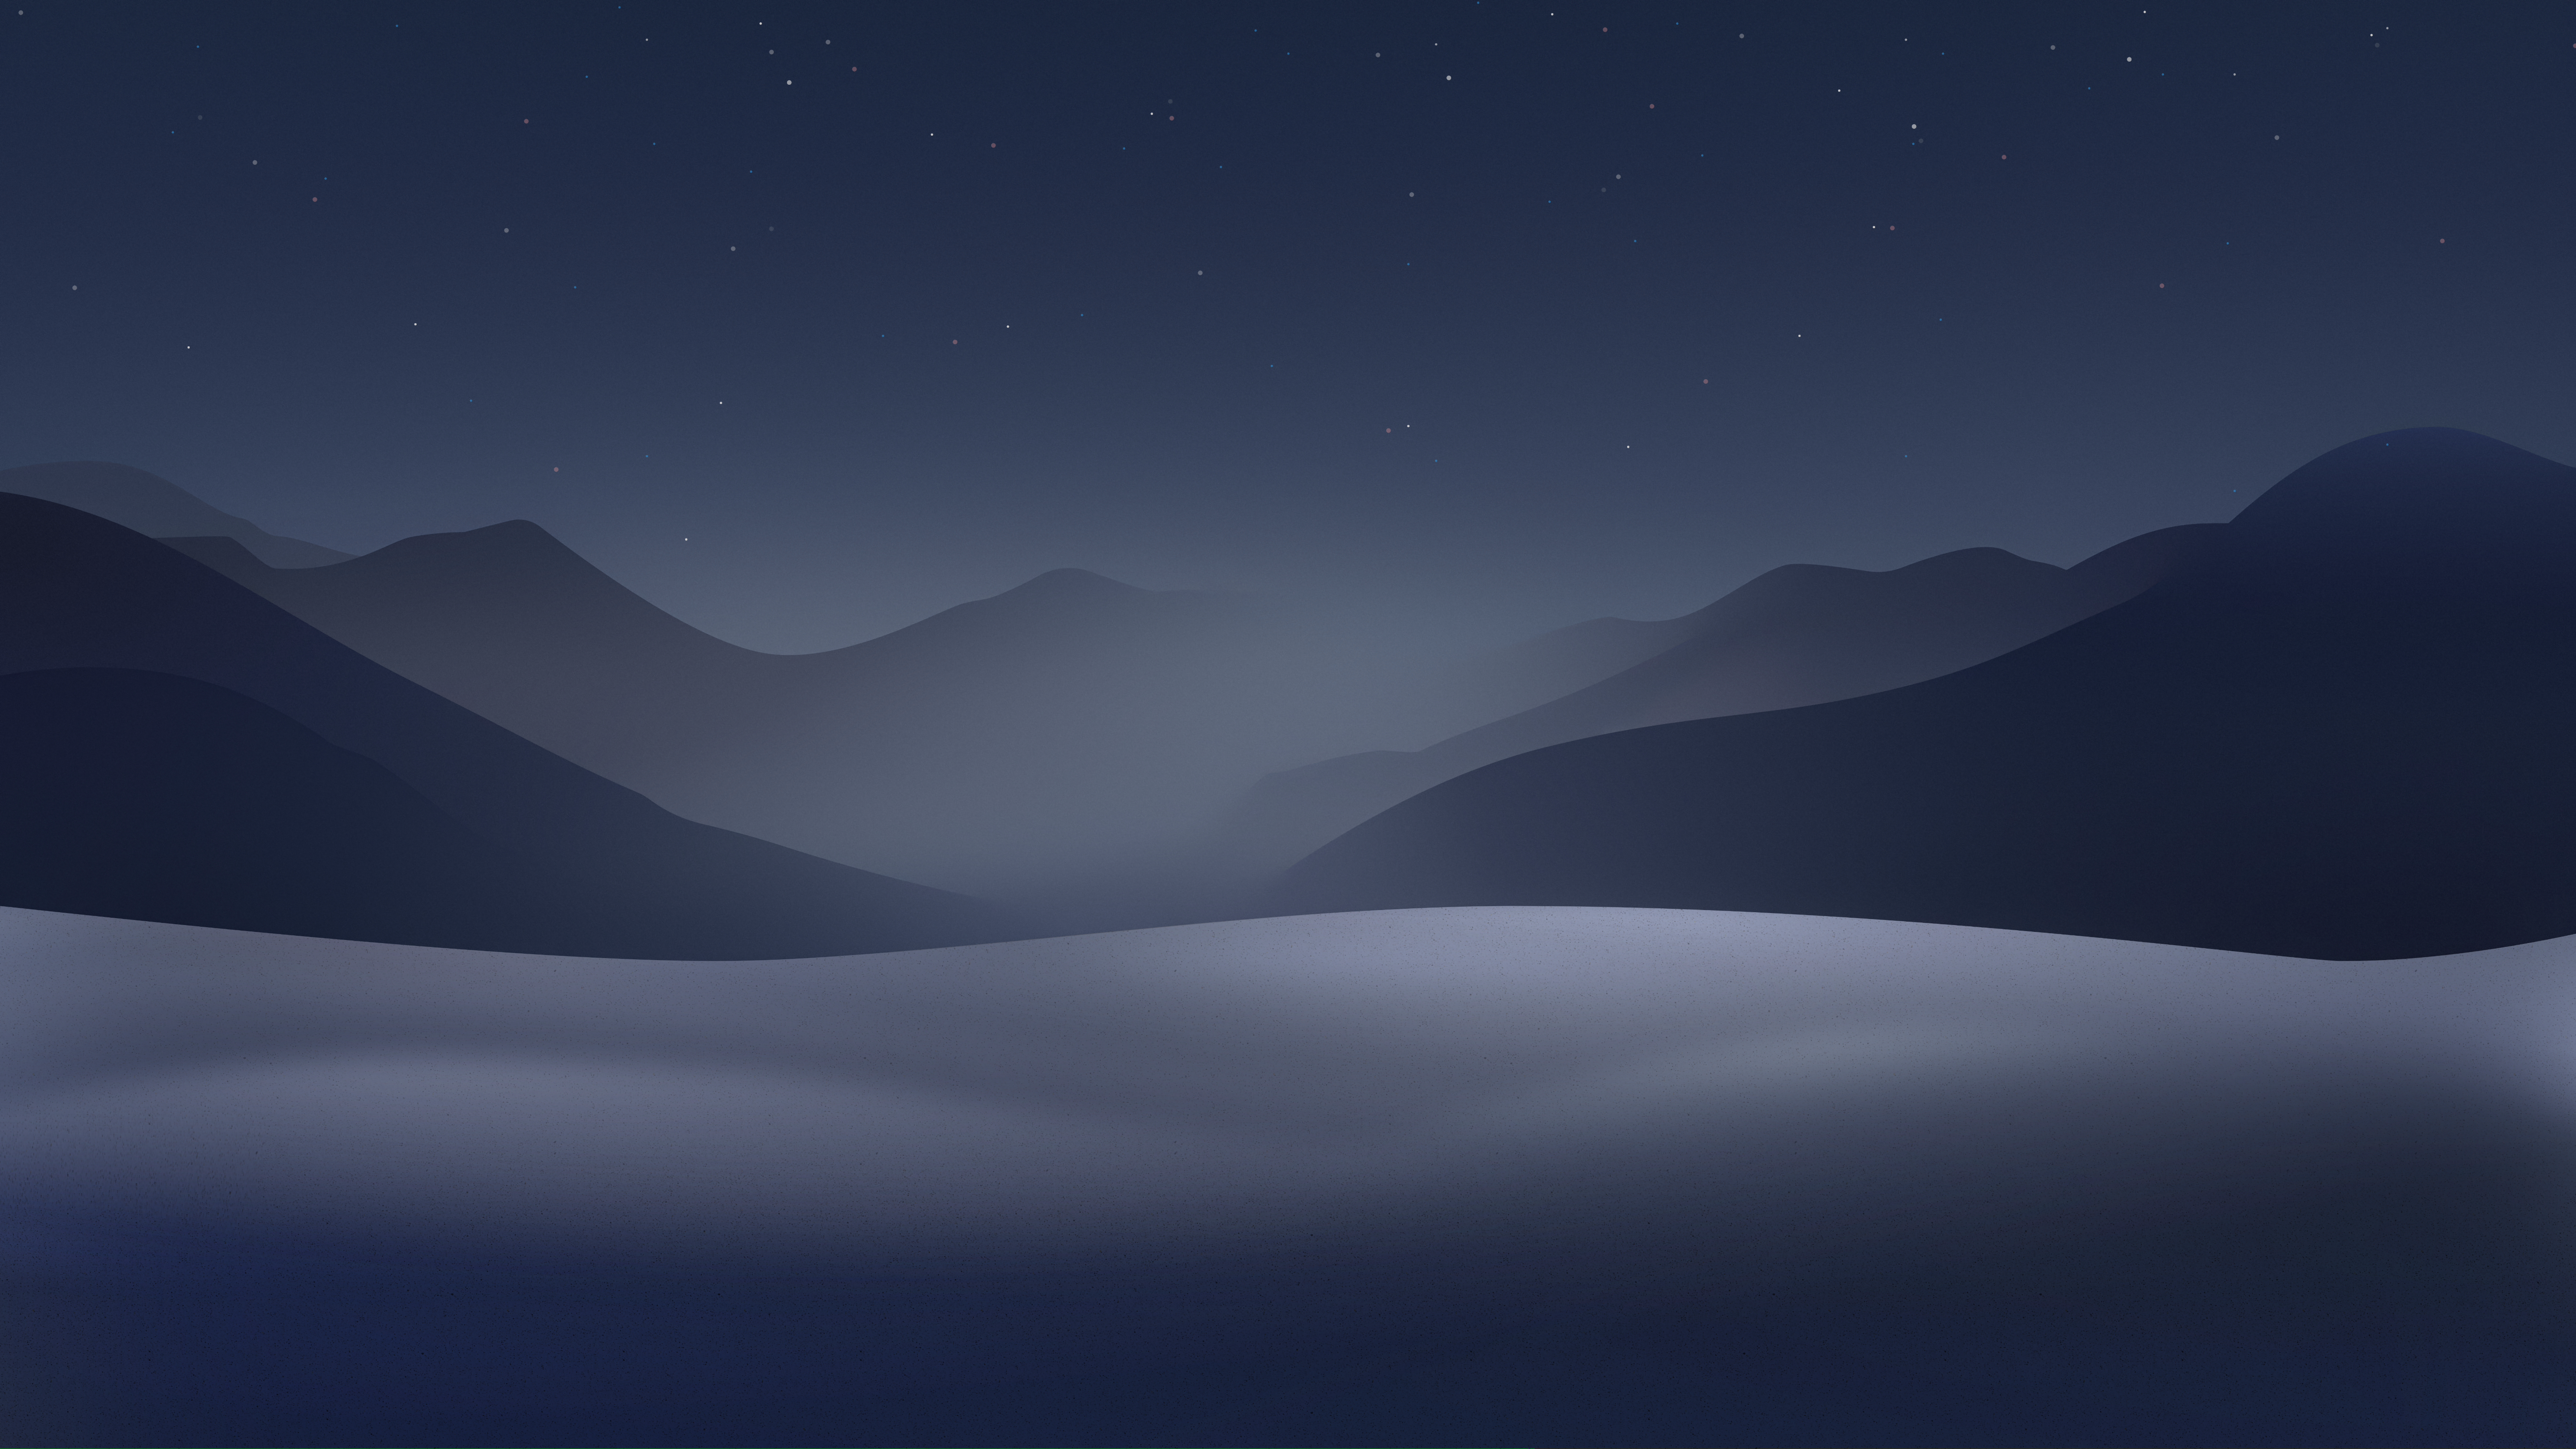 General 6016x3385 digital art artwork illustration landscape night nightscape mountains field simple background minimalism nature stars sky